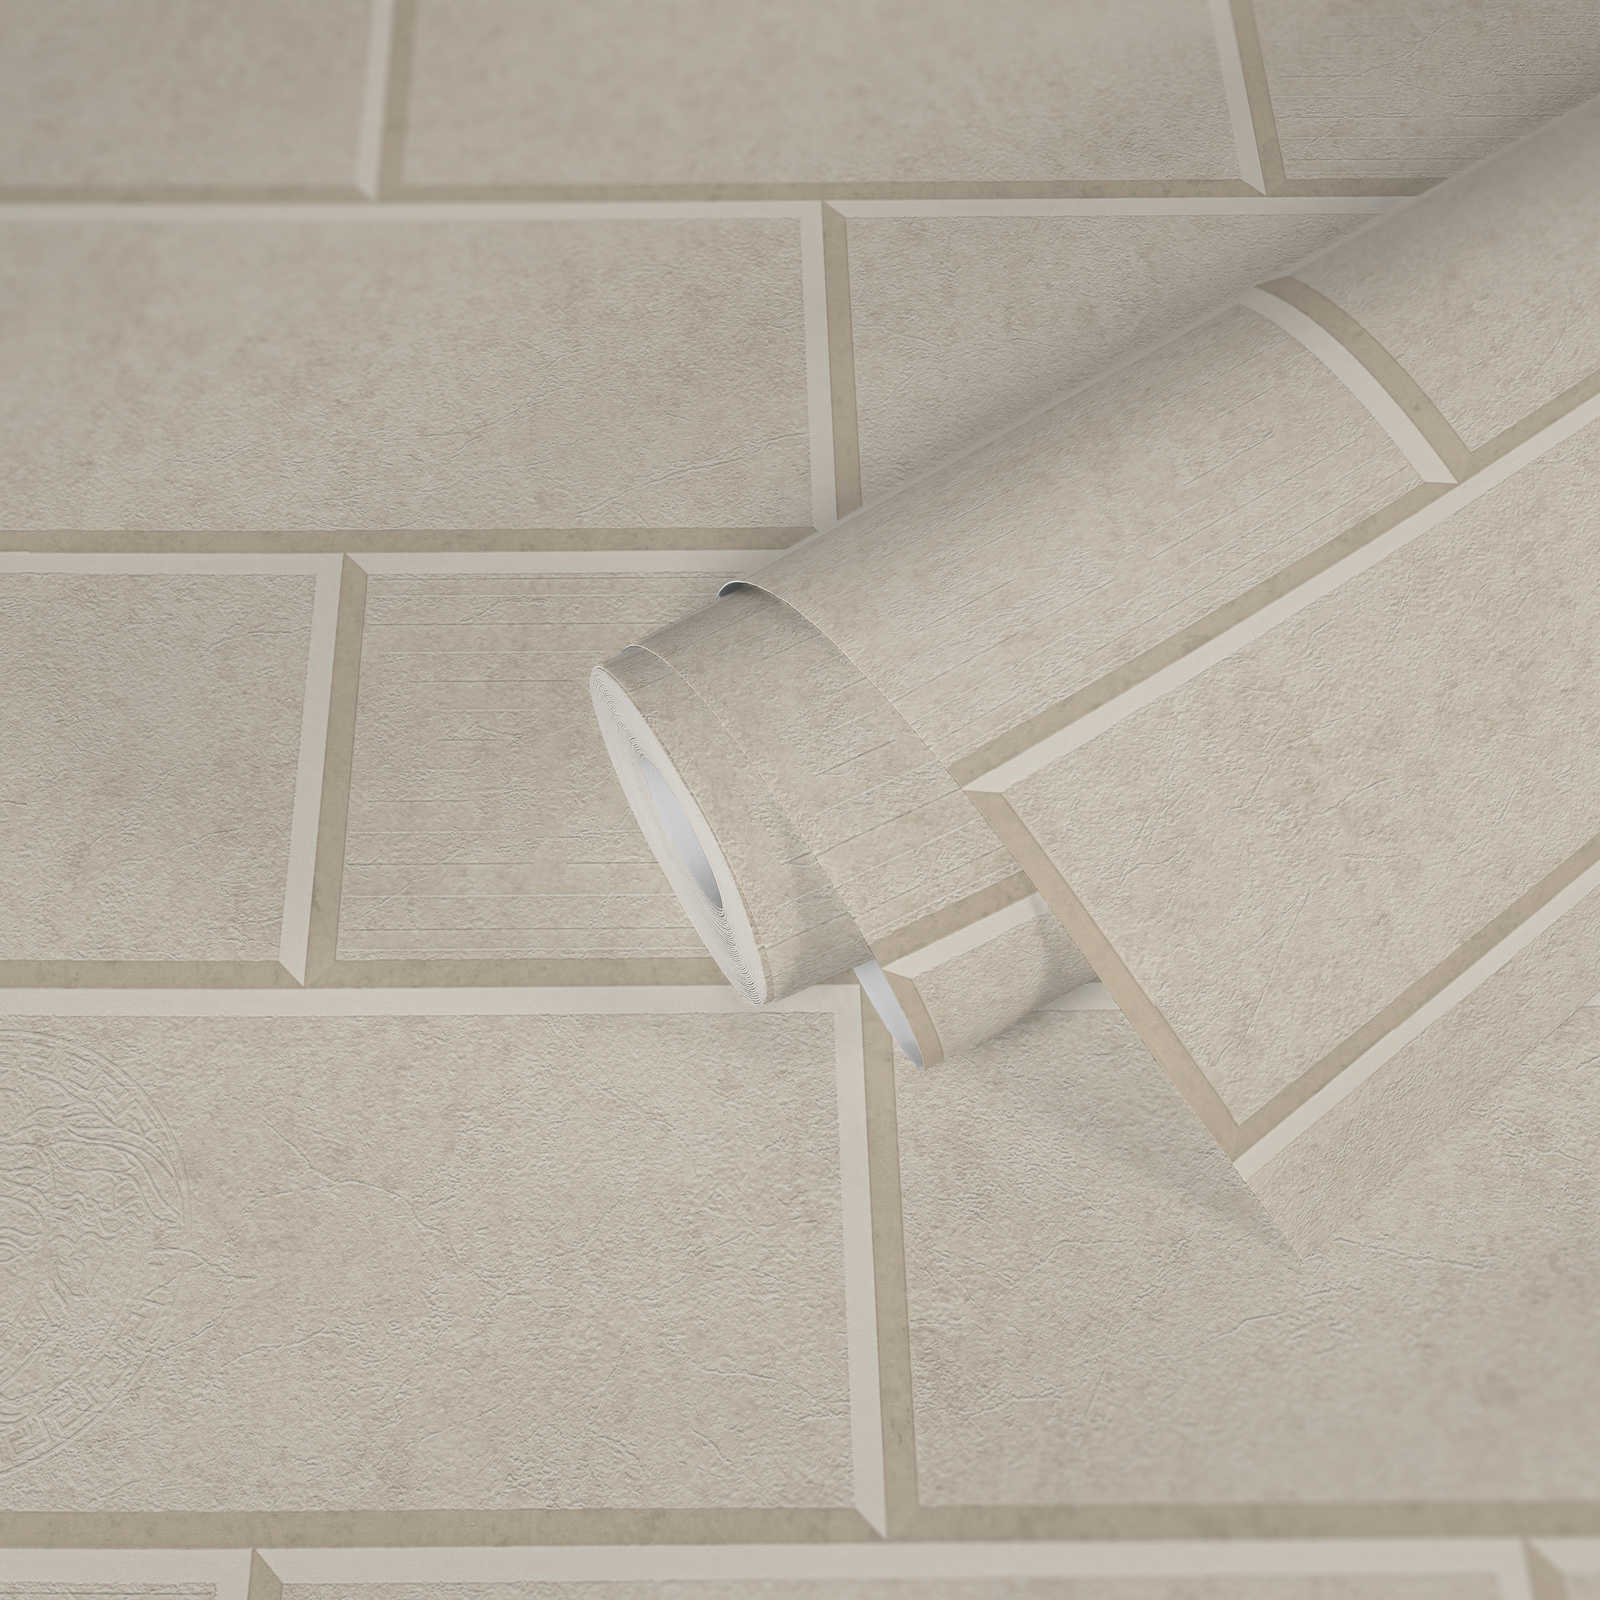             Wallpaper stone look sandstone masonry - beige, cream
        